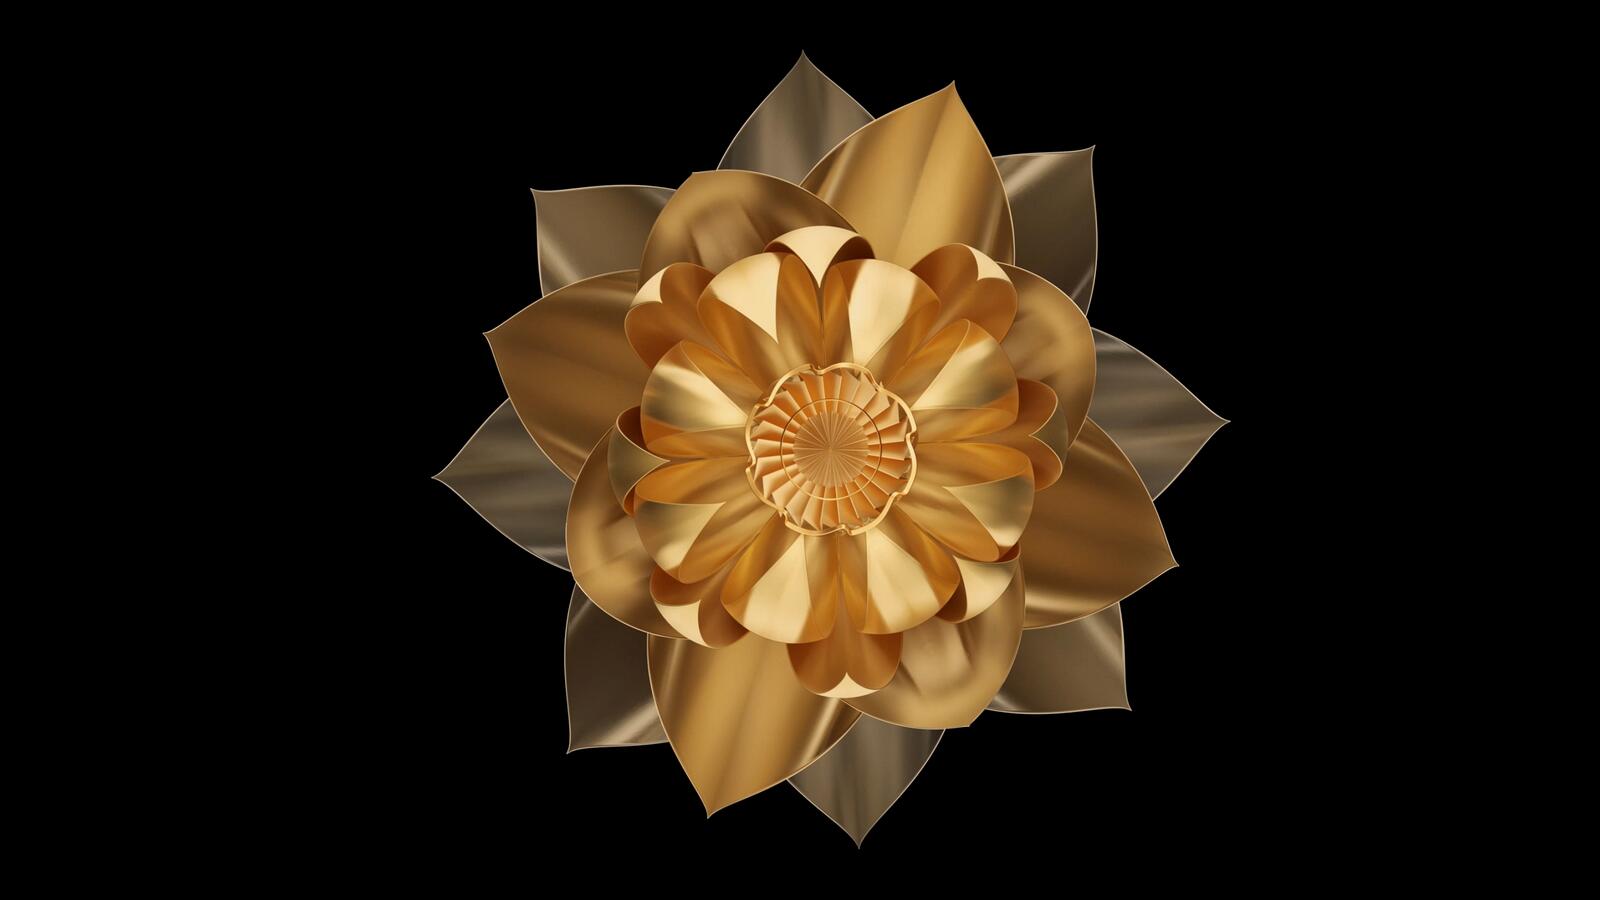 Free photo Digital image of a golden flower